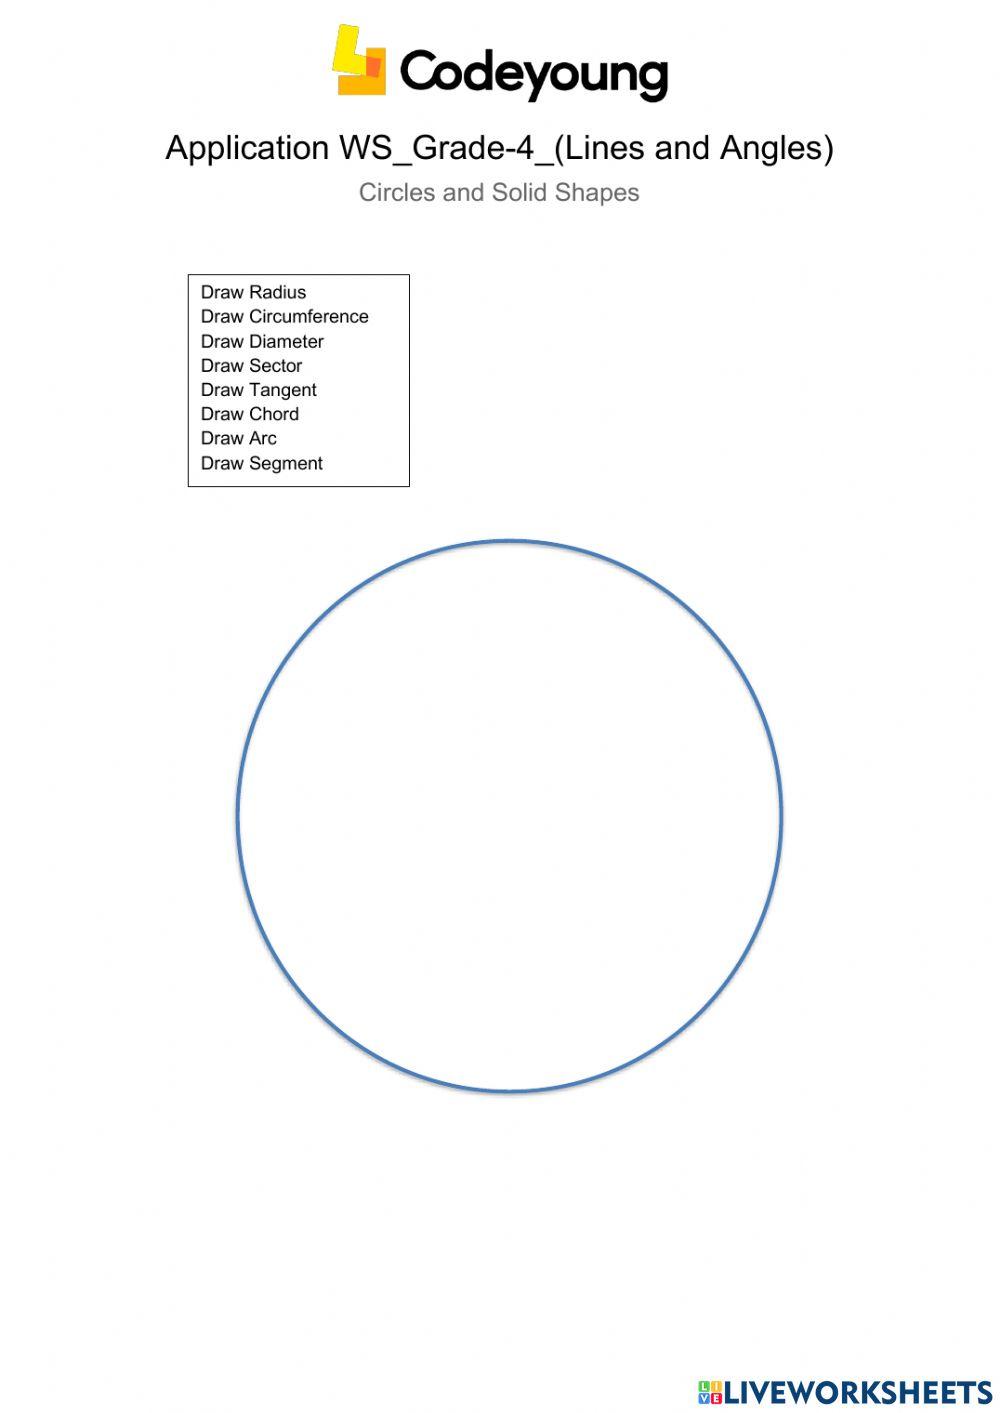 LO1 Circles and Solid Shapes Application WS